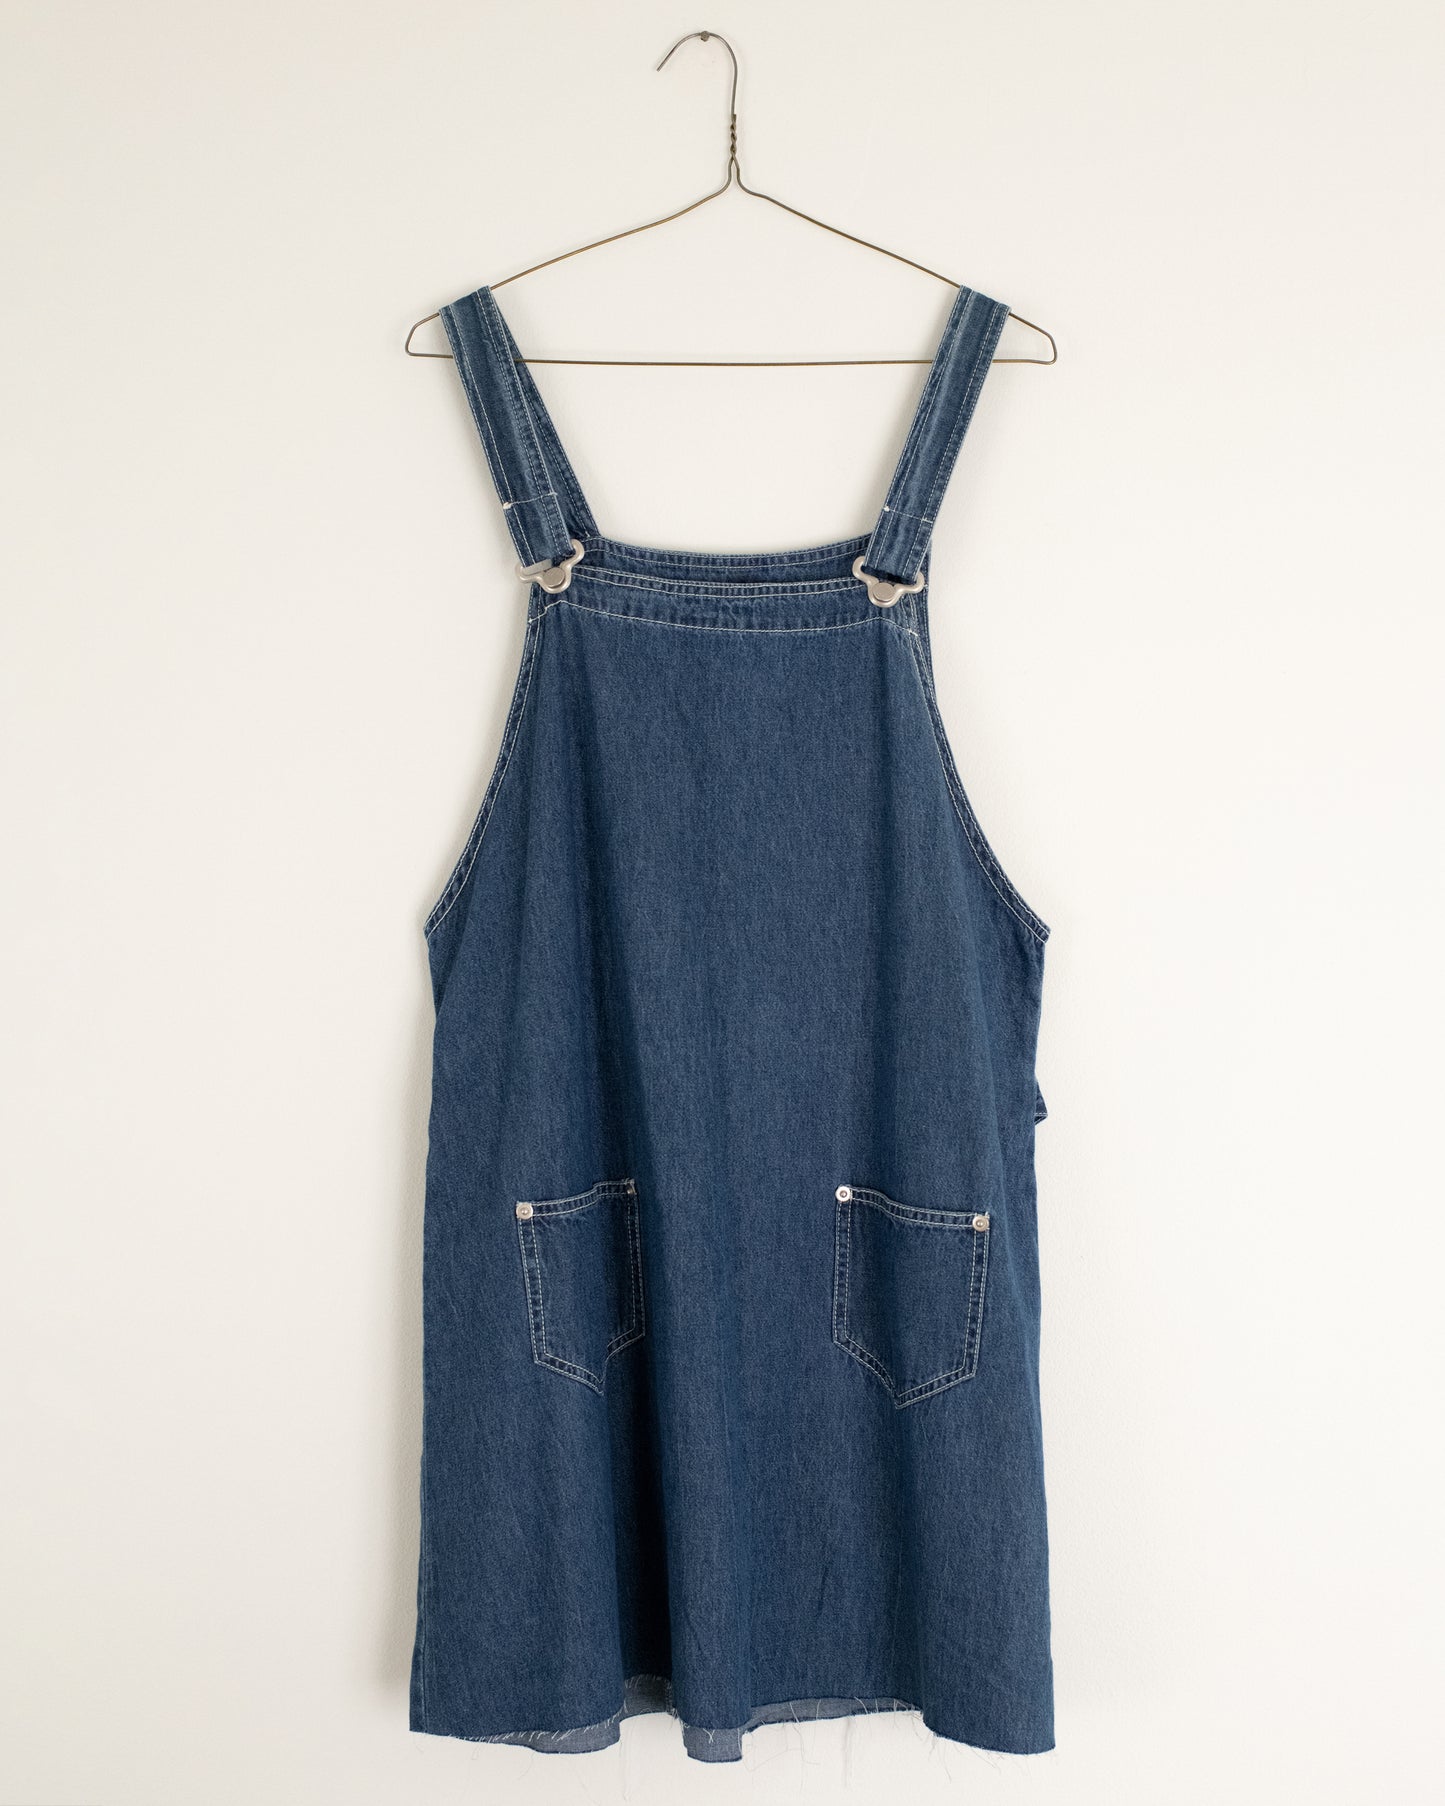 Vintage Denim Overall Dress (S/M)